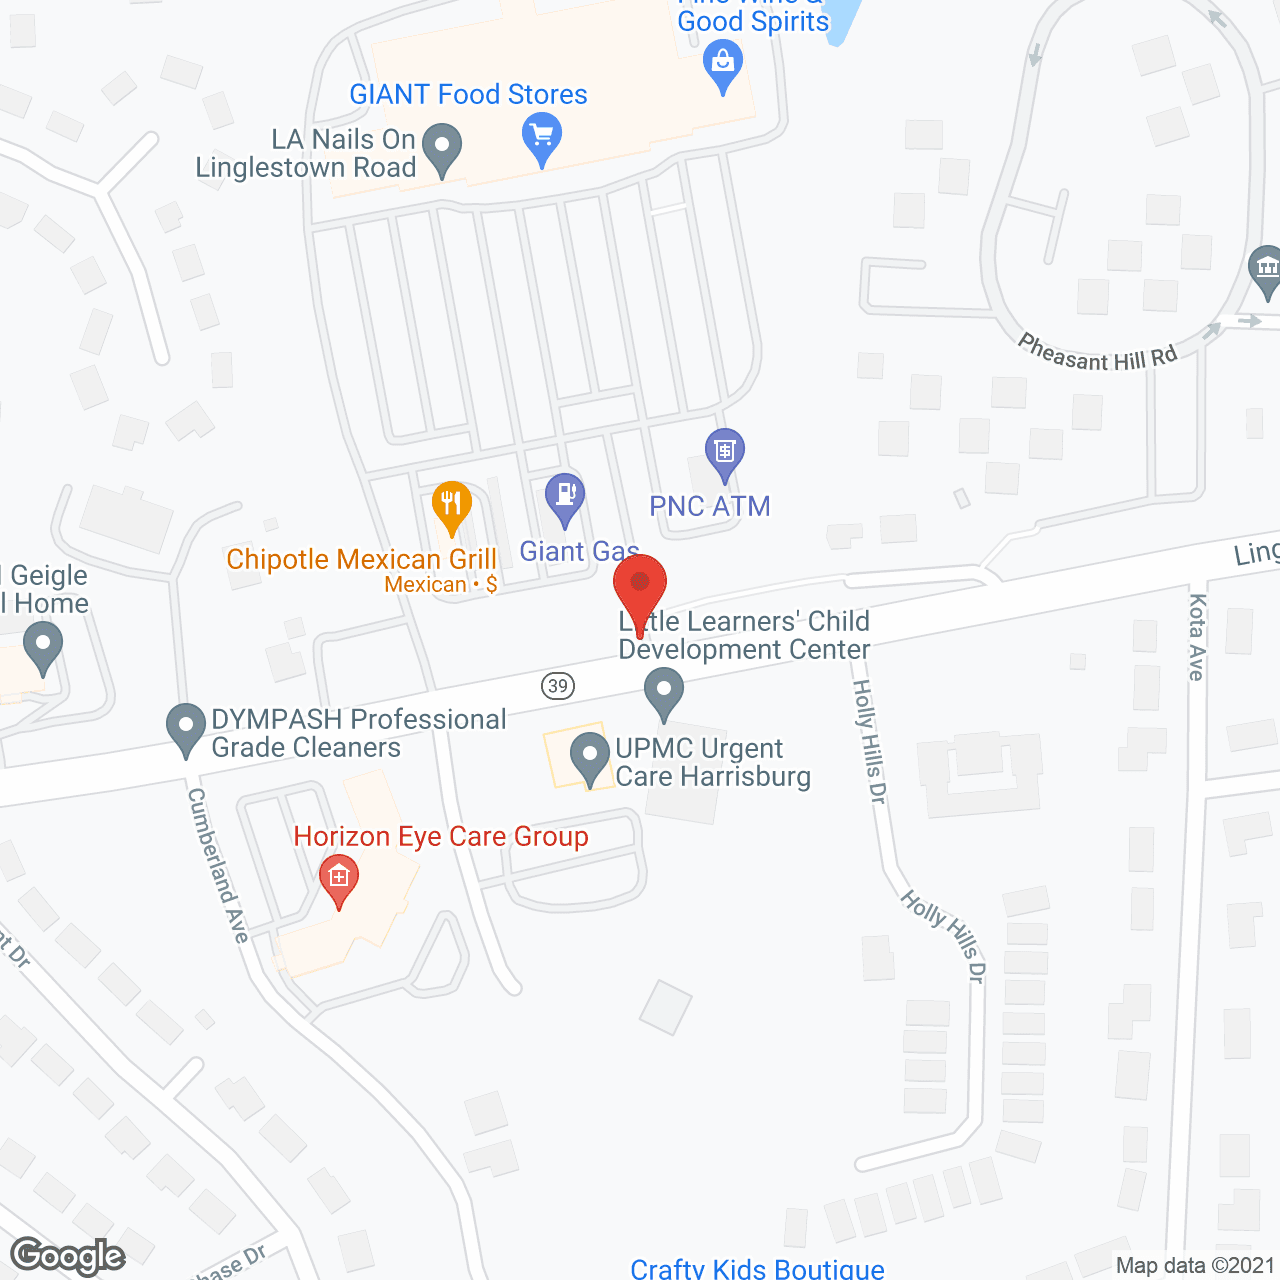 TheKey of Harrisburg, PA in google map